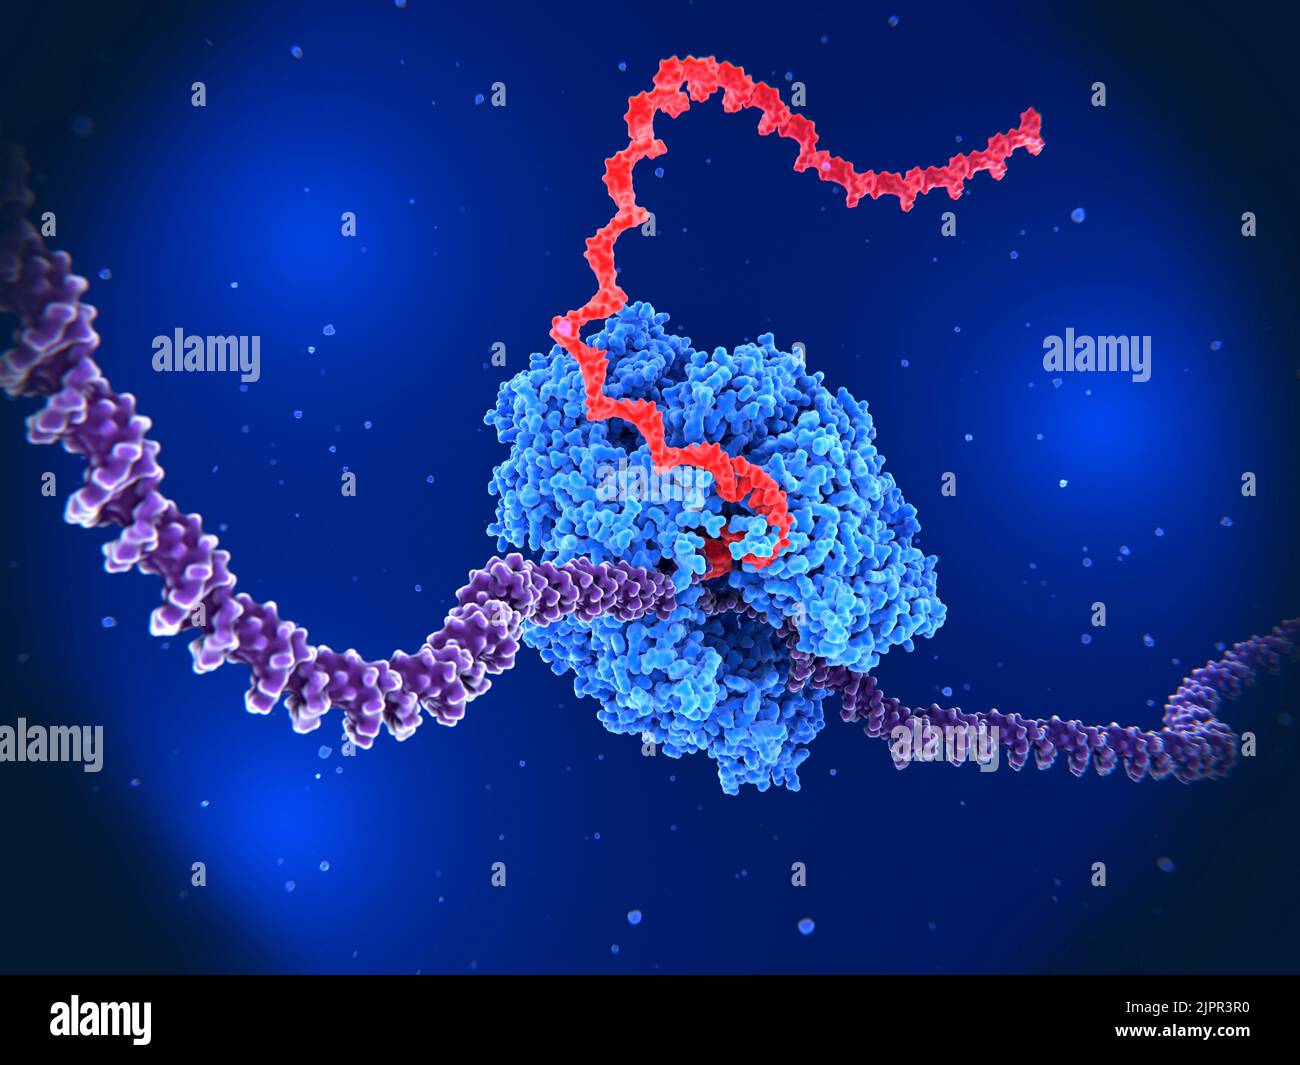 RNA polymerase transcribing DNA into RNA, illustration Stock Photo